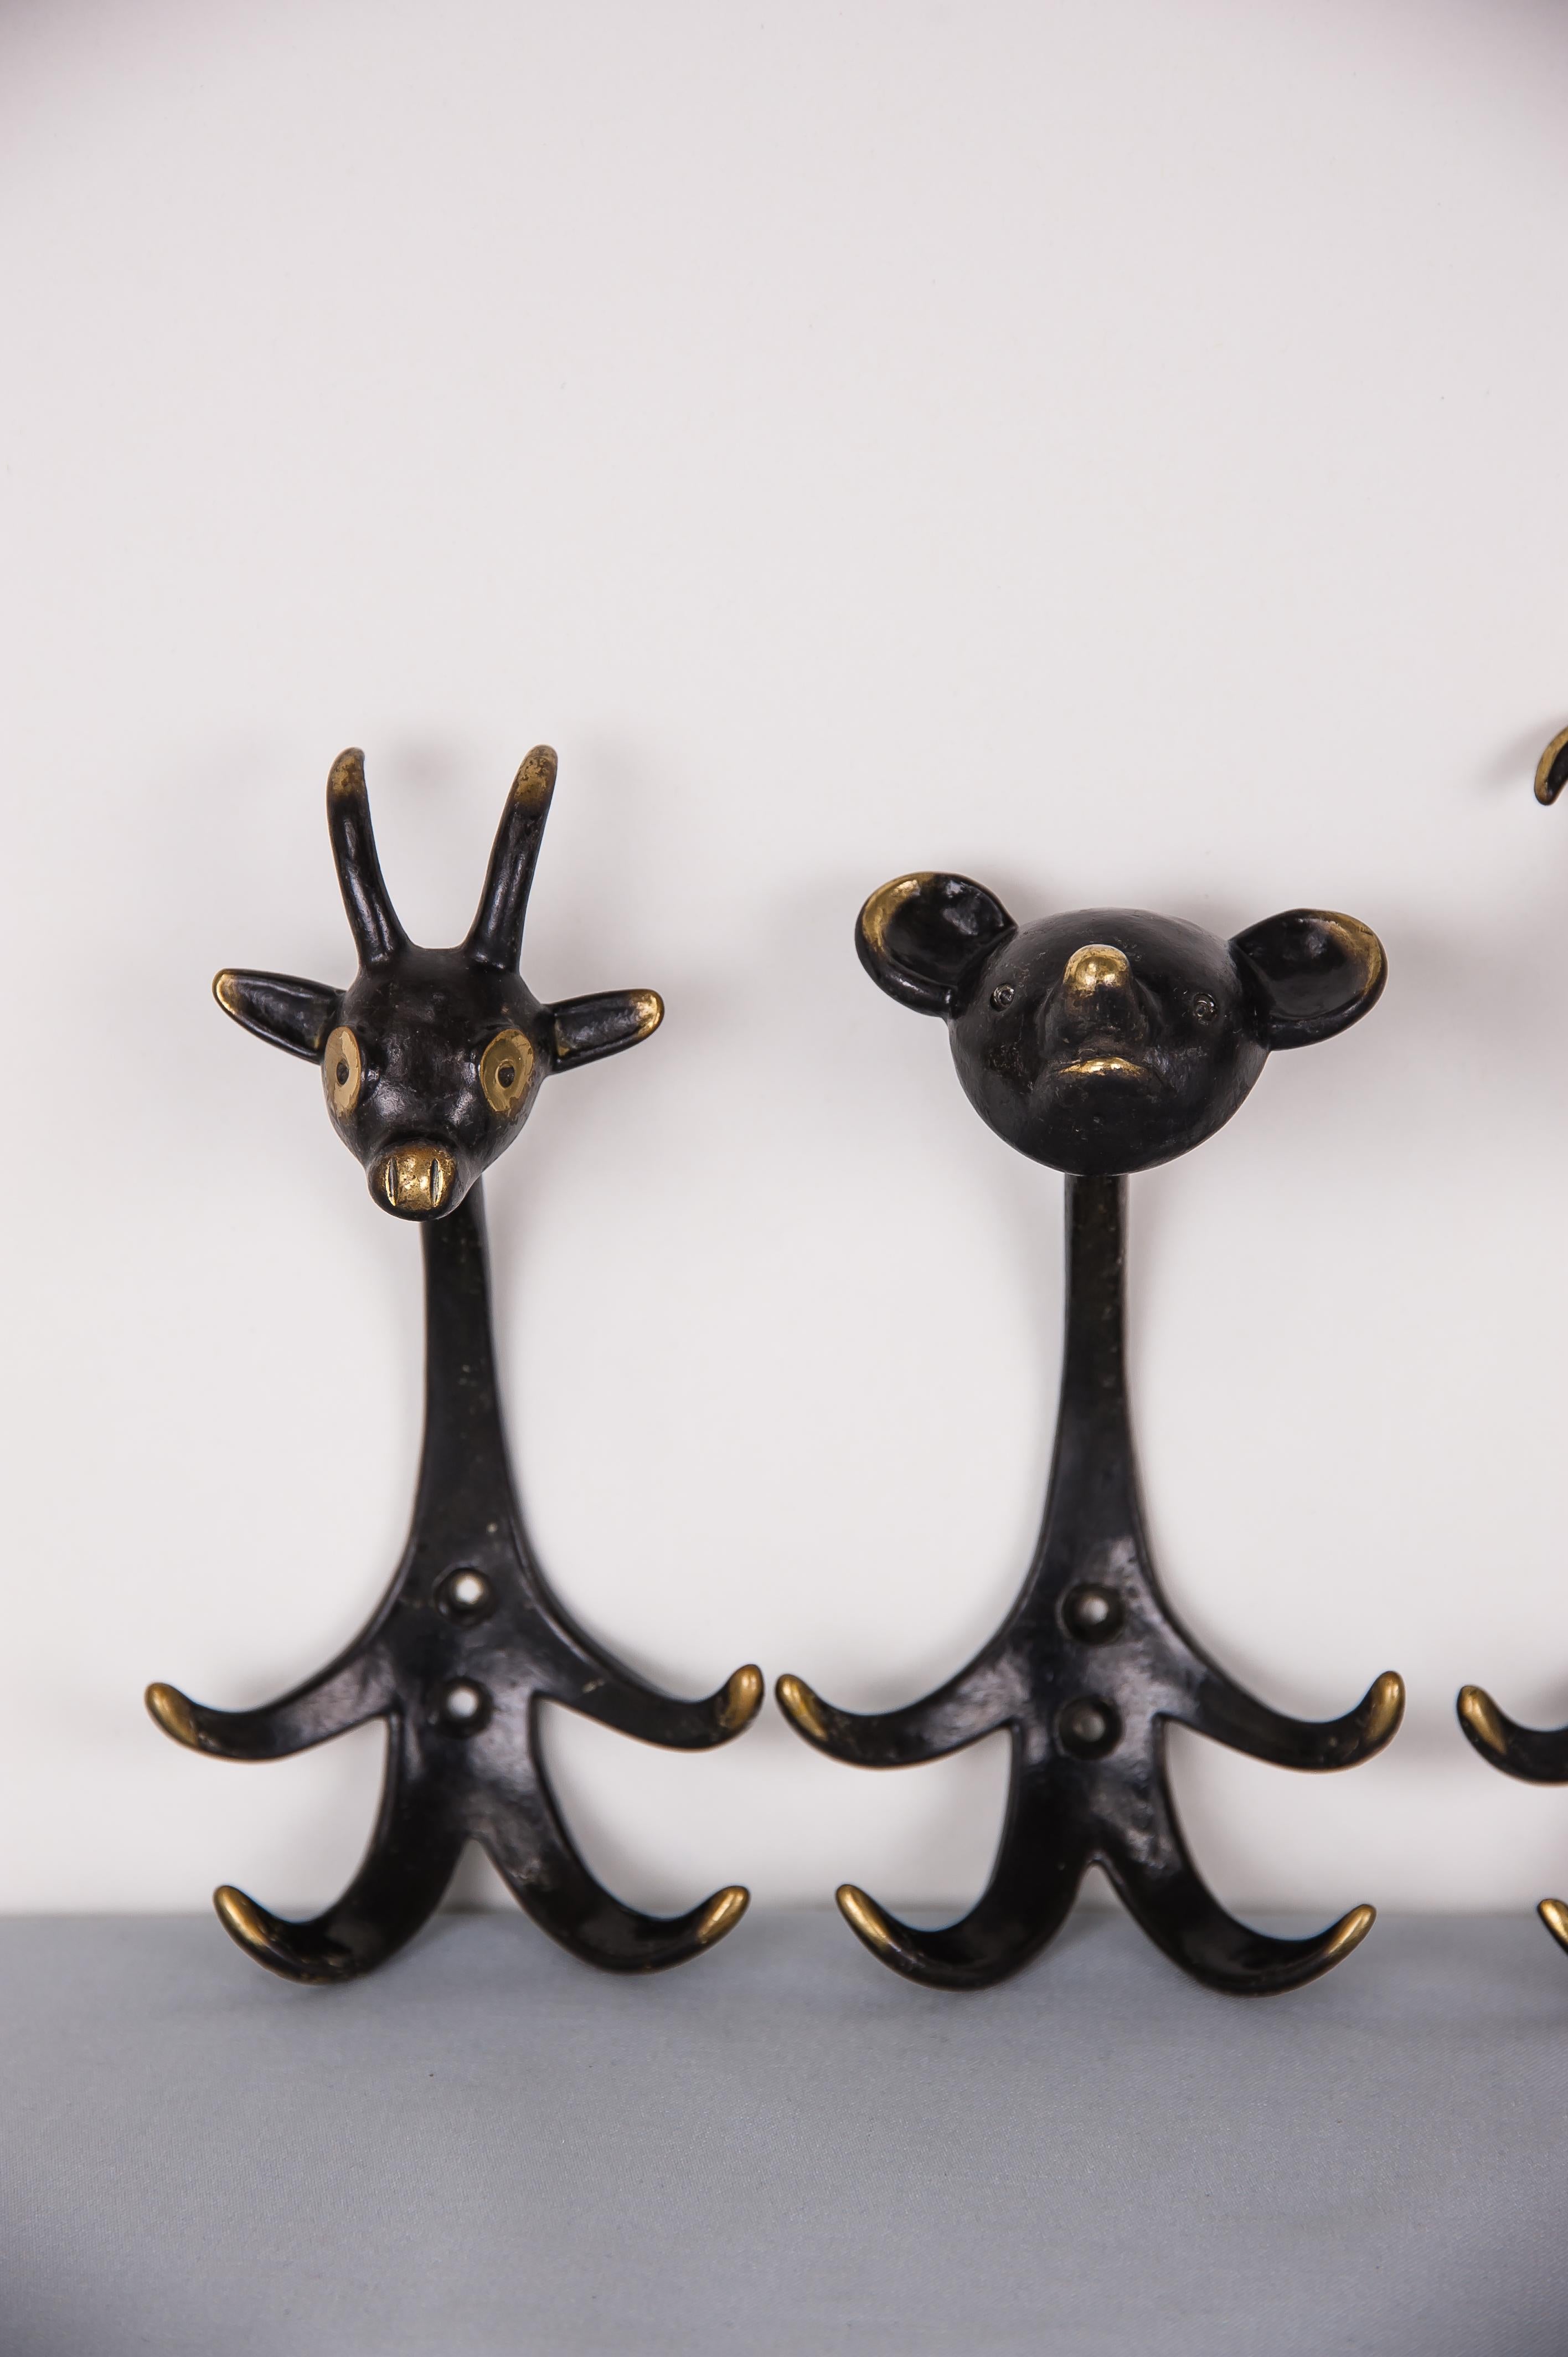 6 rare Walter Bosse hooks, circa 1950s.
Original condition.

Capricorn, bear, gnome (dwarf), monkey, cow, cat.